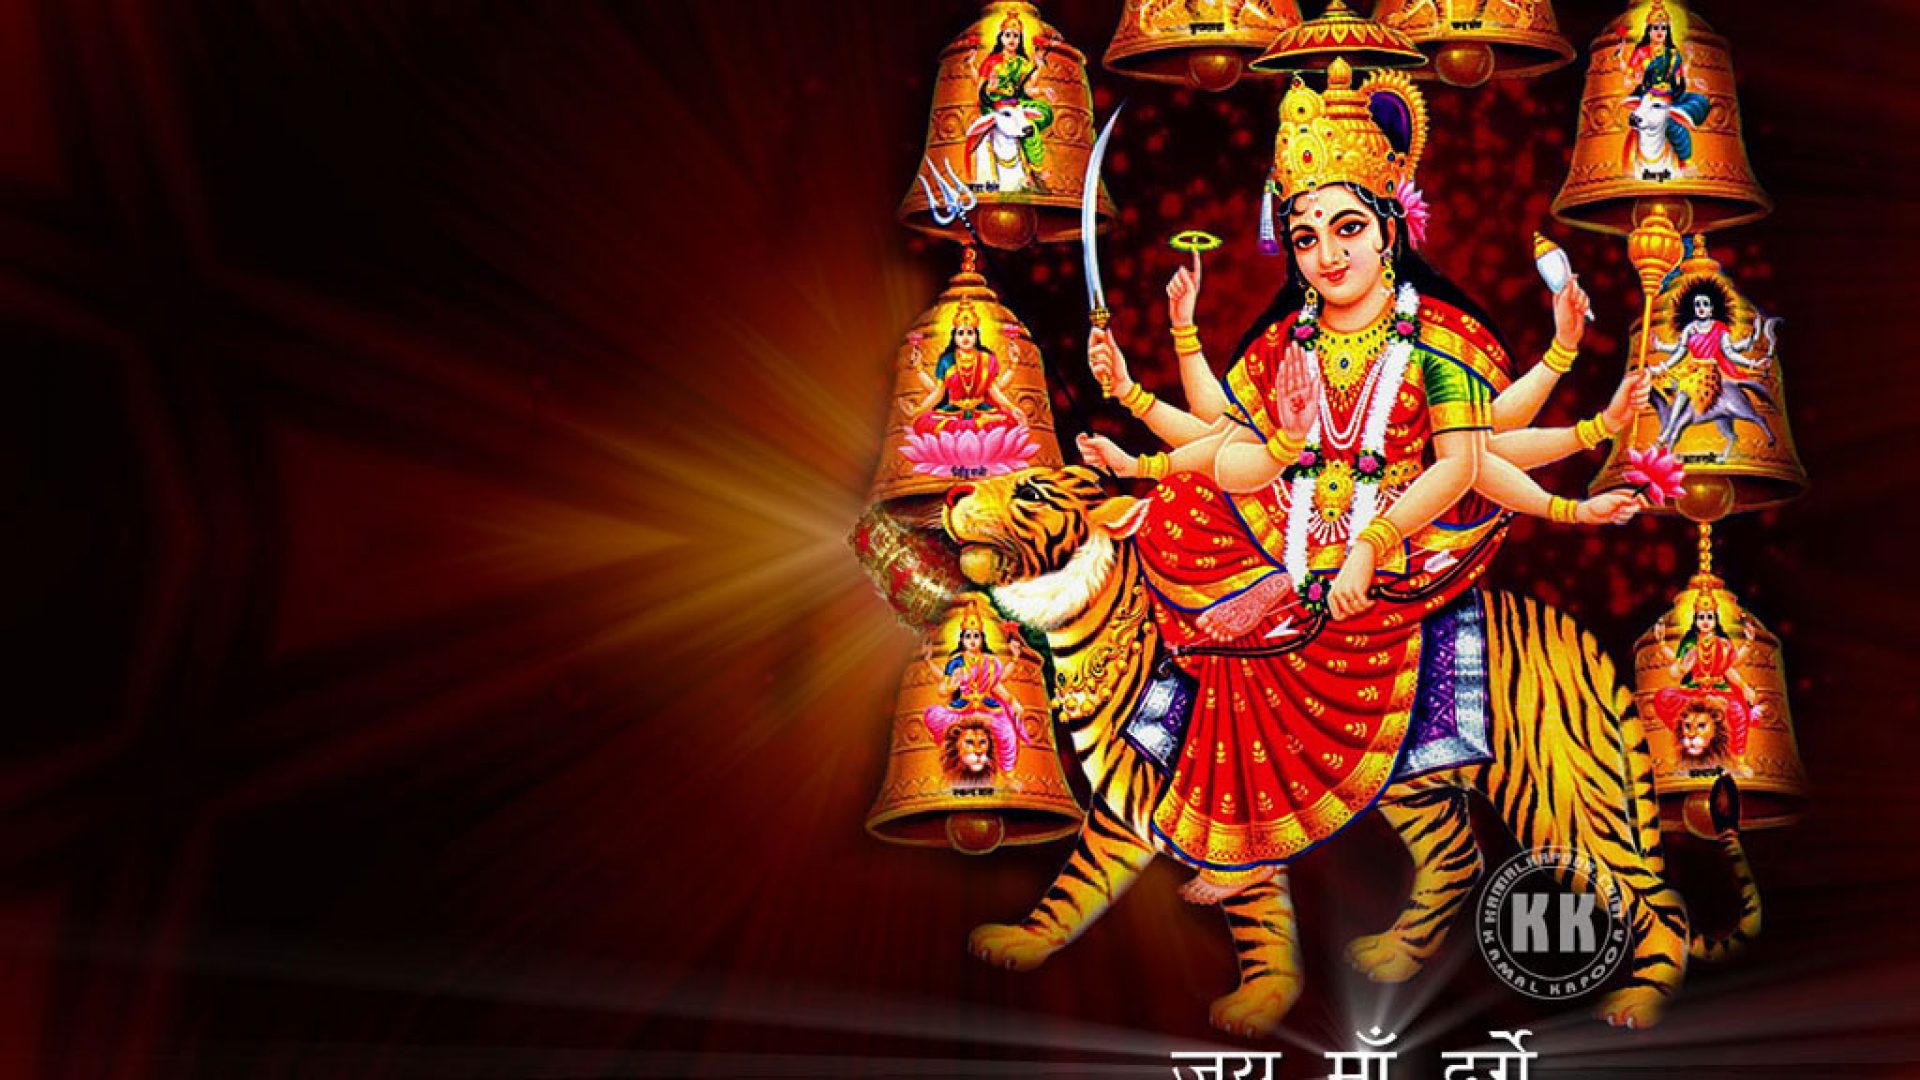 Happy Durga Puja Wallpapers